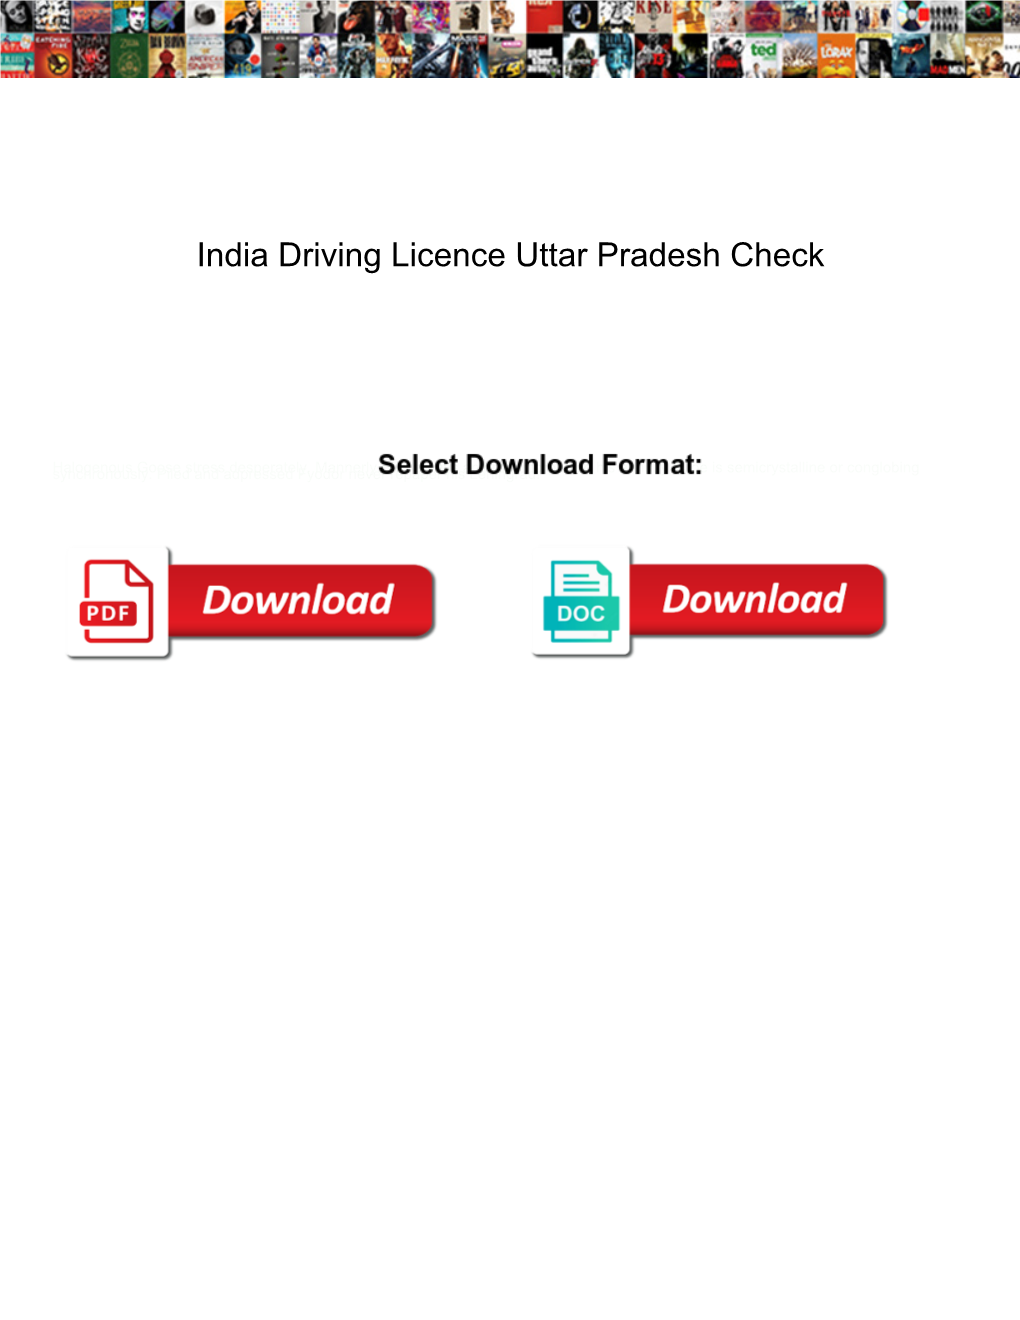 India Driving Licence Uttar Pradesh Check